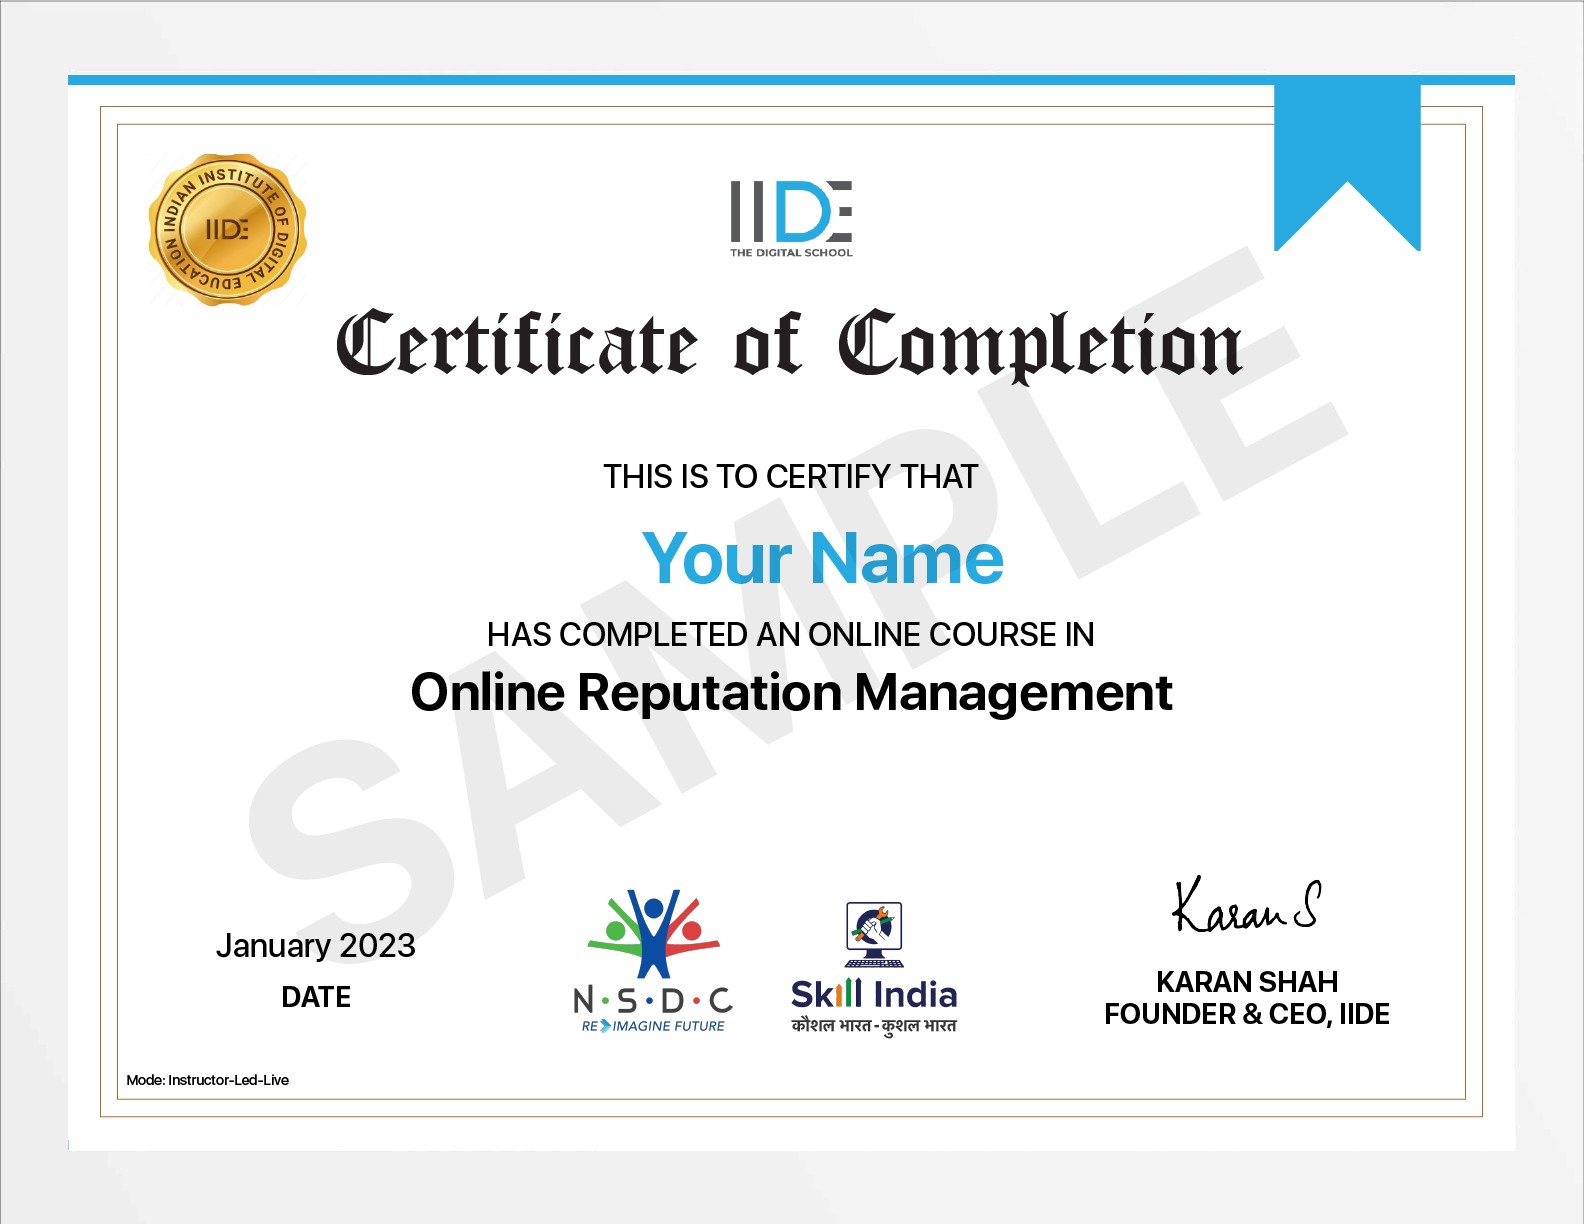 #1 Online Reputation Management Course & Certification | IIDE